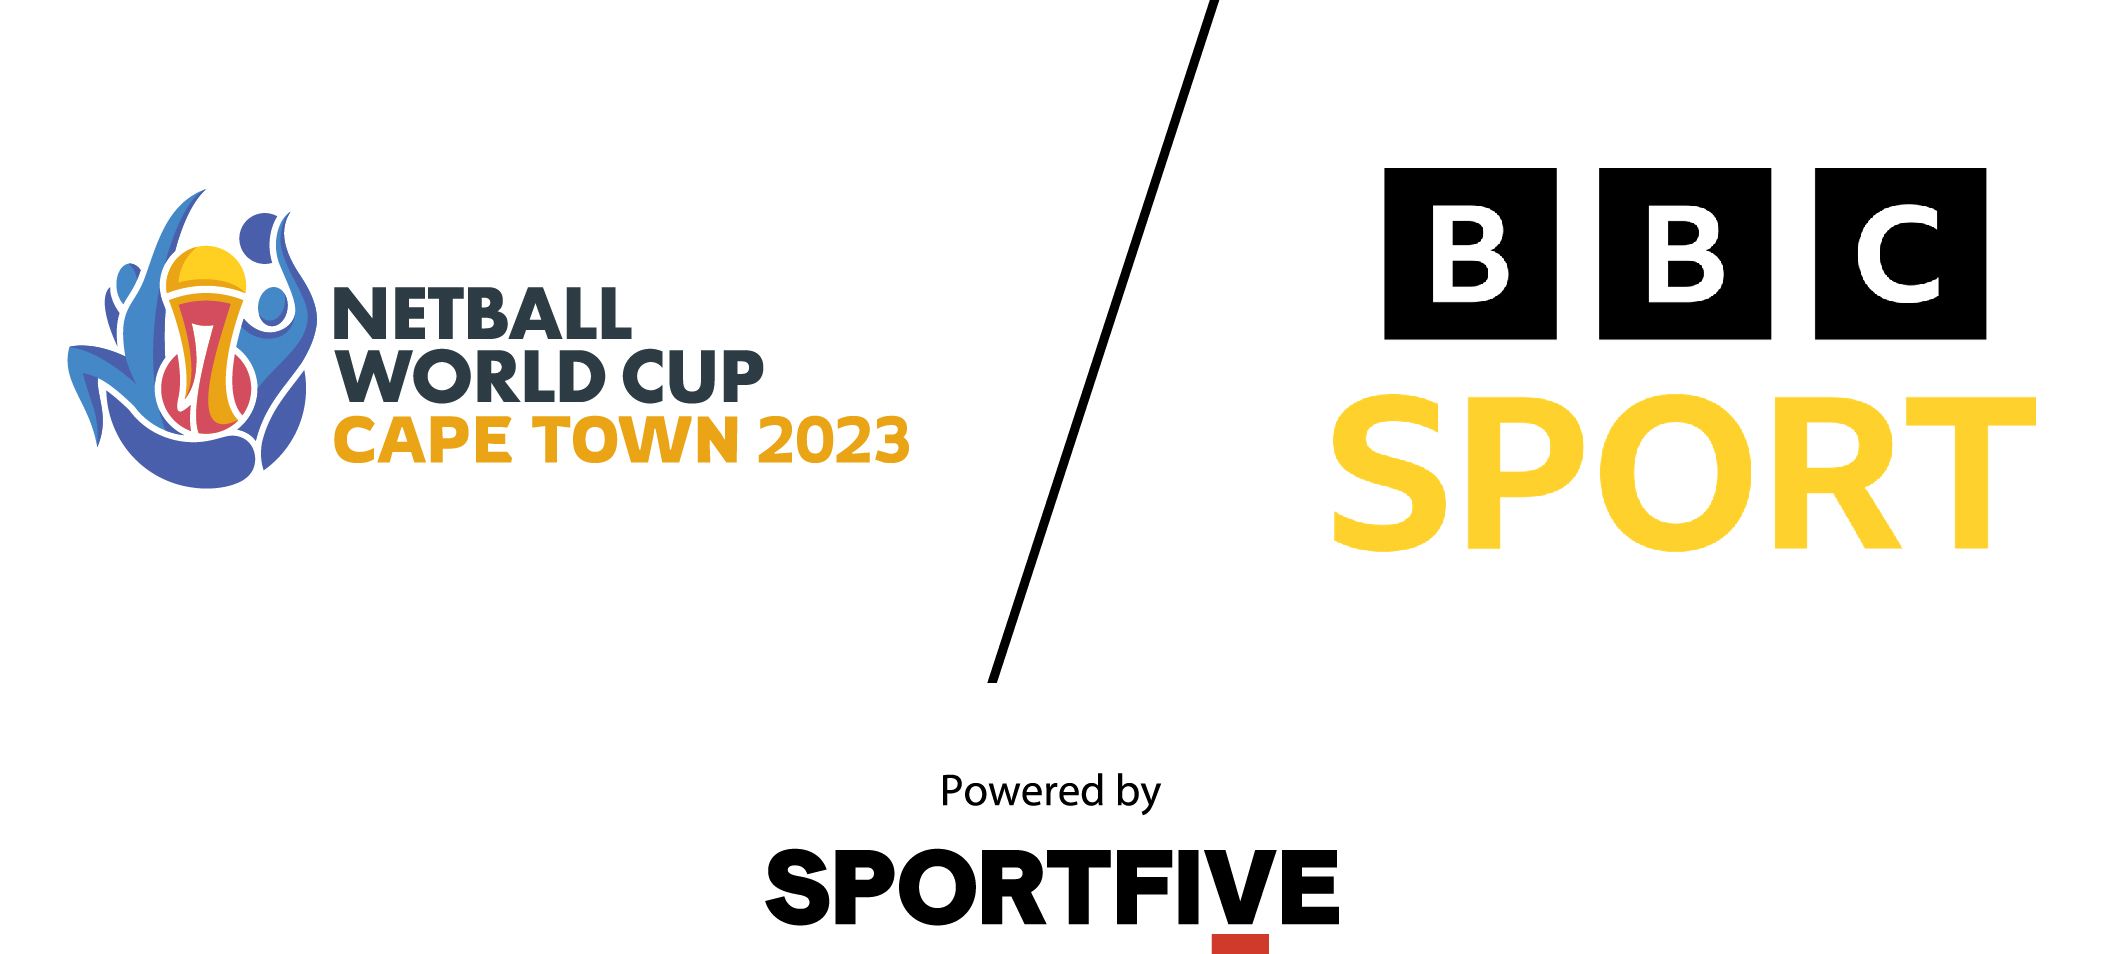 BBC and World Netball partner for Netball World Cup 2023 SPORTFIVE